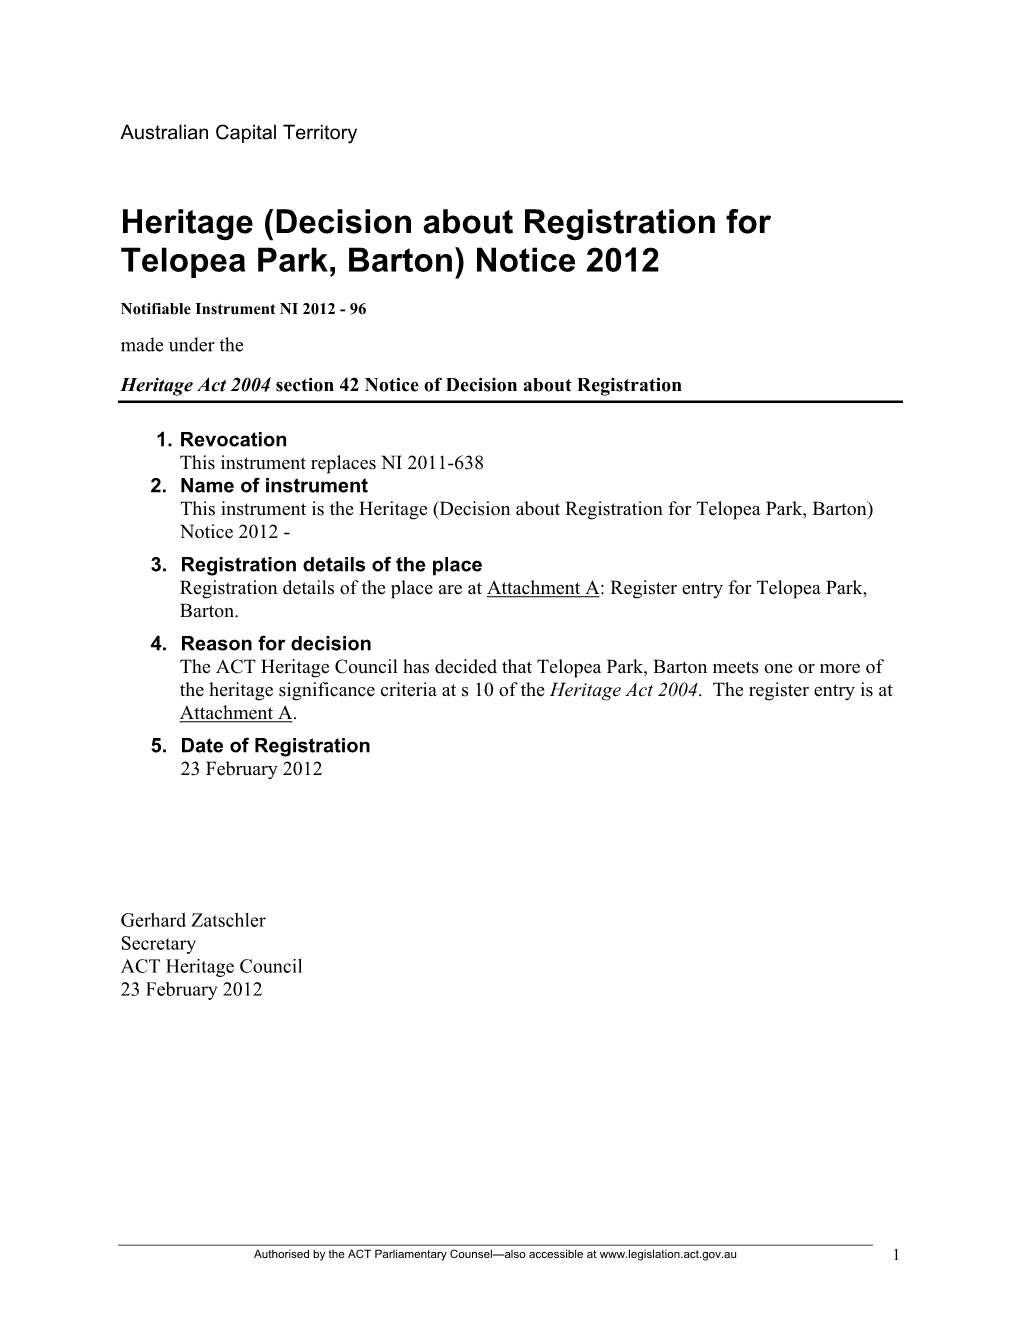 Heritage (Decision About Registration for Telopea Park, Barton) Notice 2012